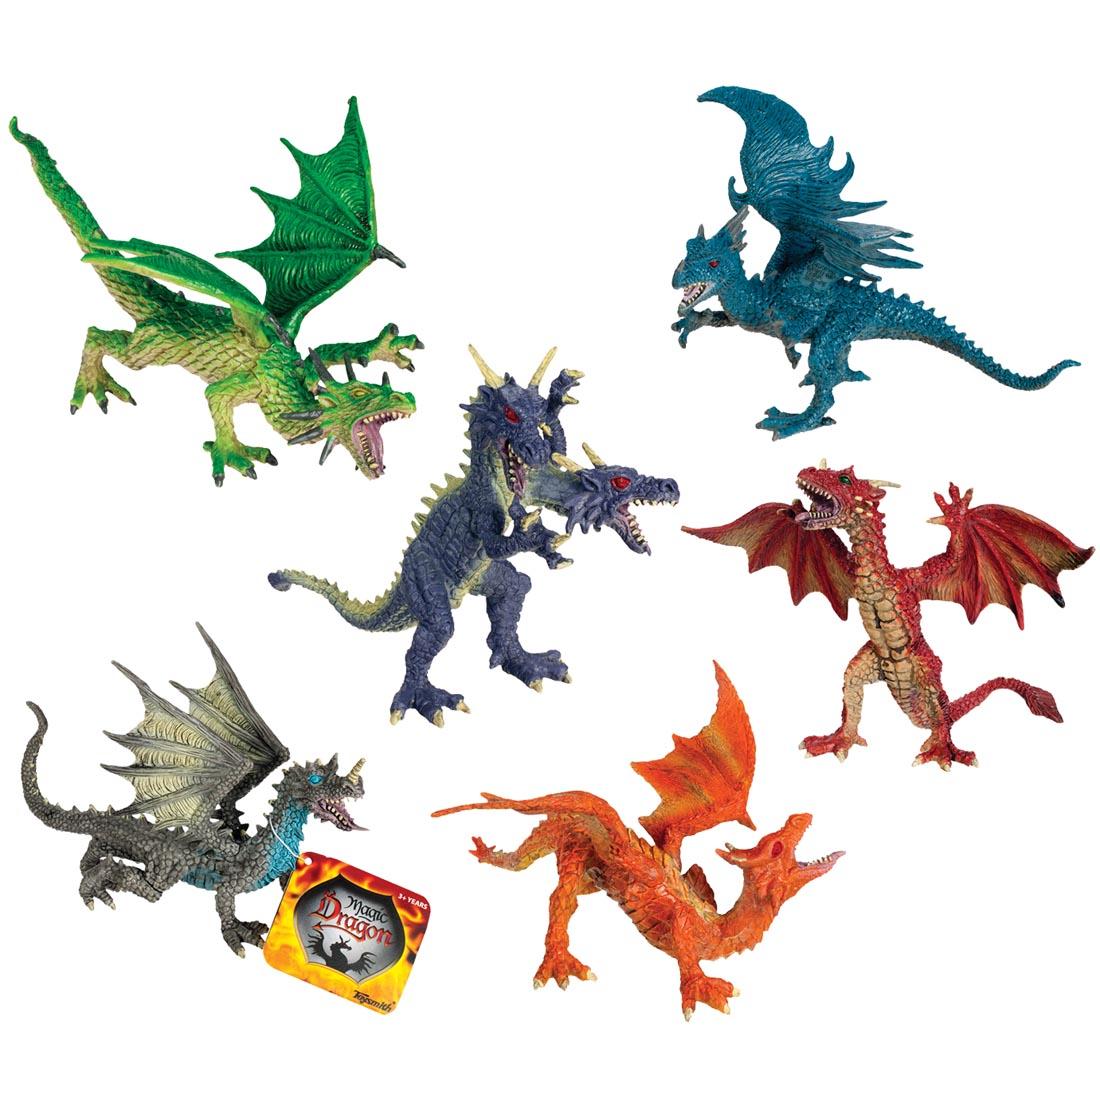 Six different Magic Dragon Figurines